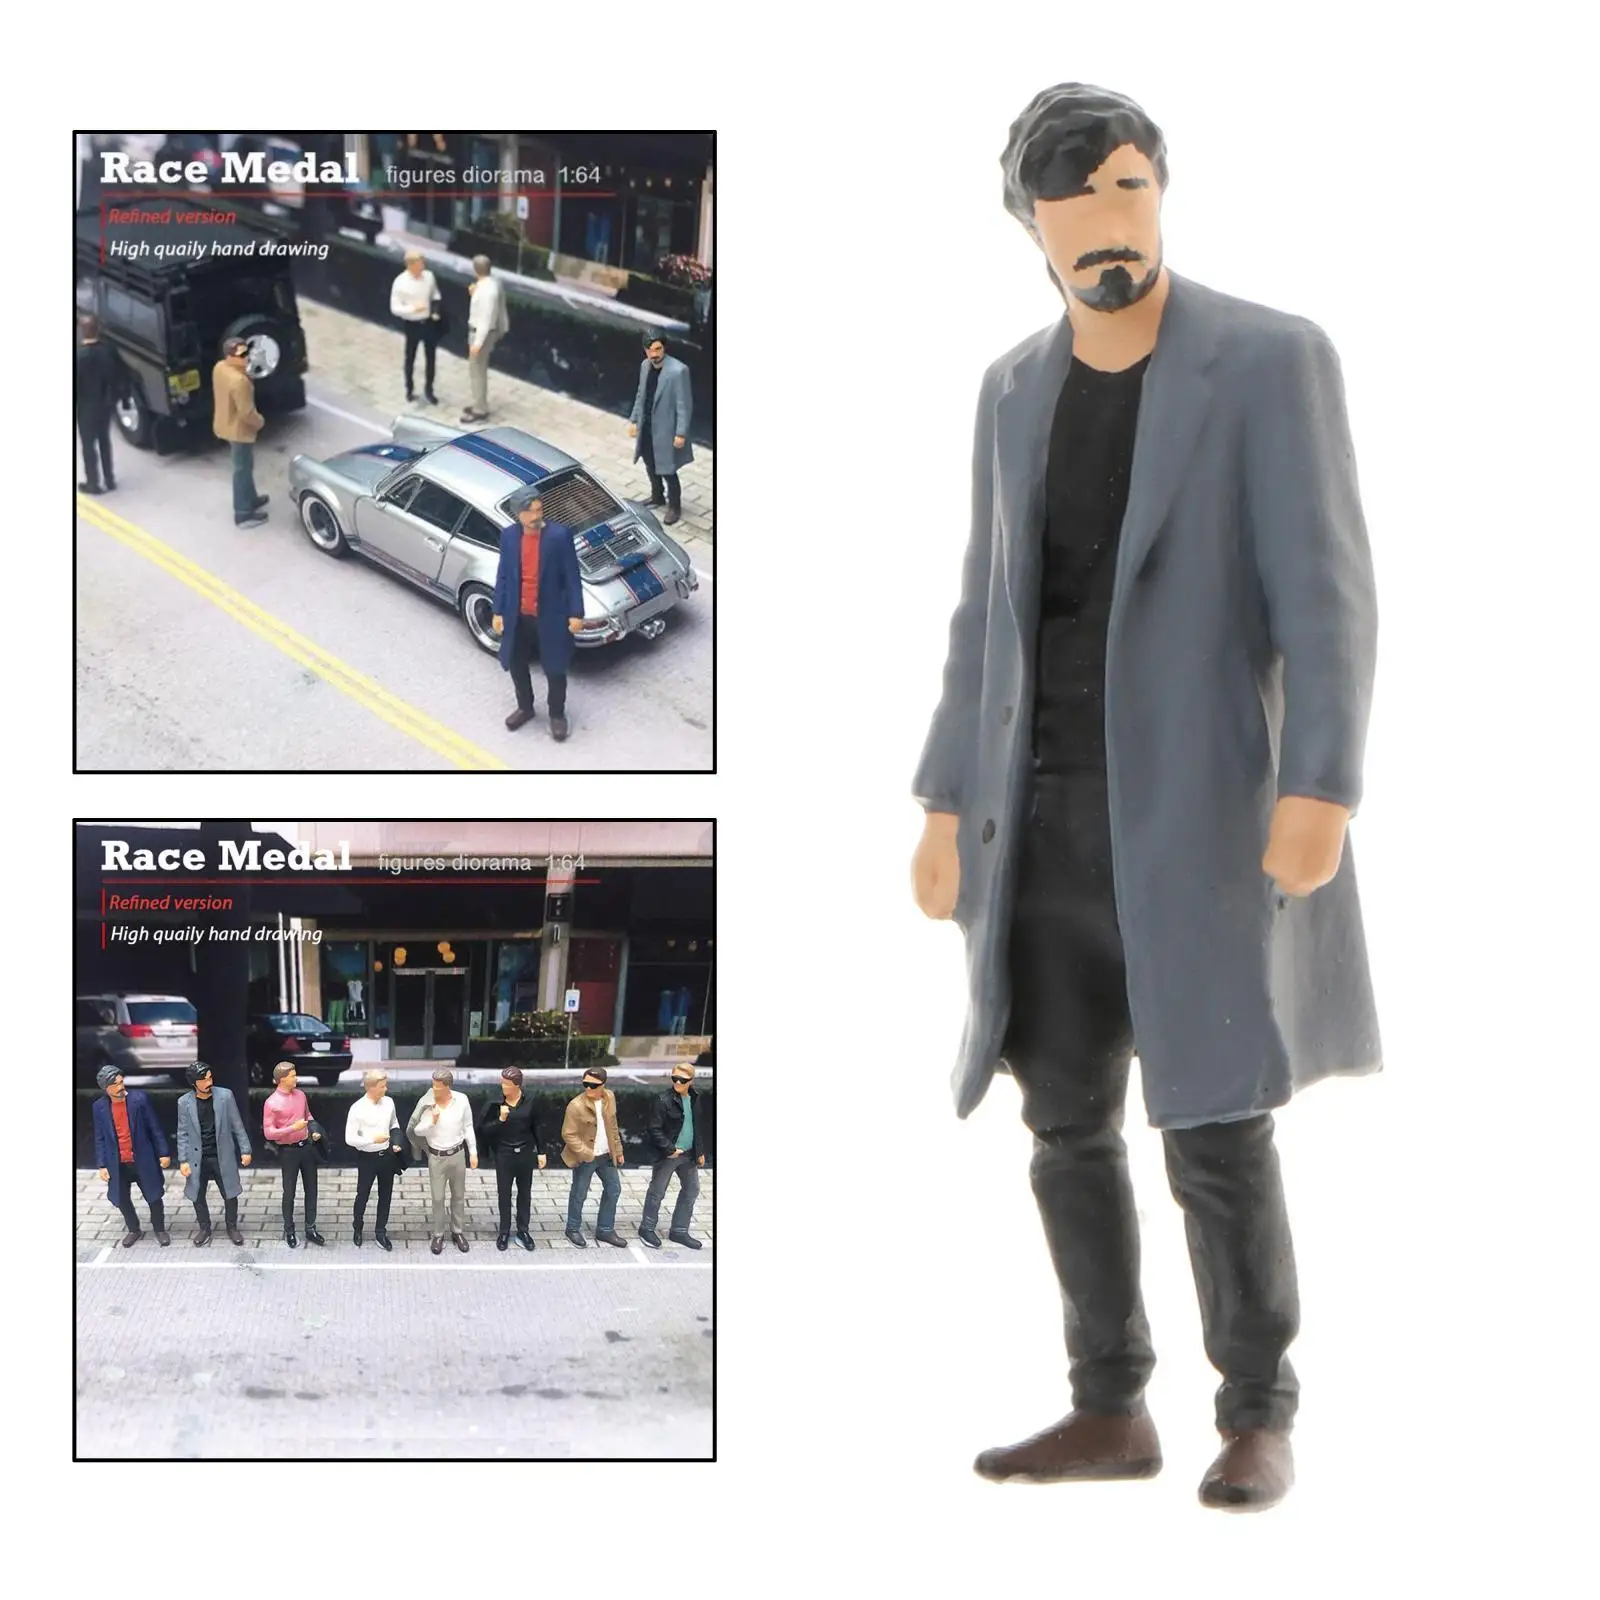 Mini 1:64 Scale Diorama Figure Jacket Street Train Scenery Accs Supplies, Look Real and Durable, Make the Scene  